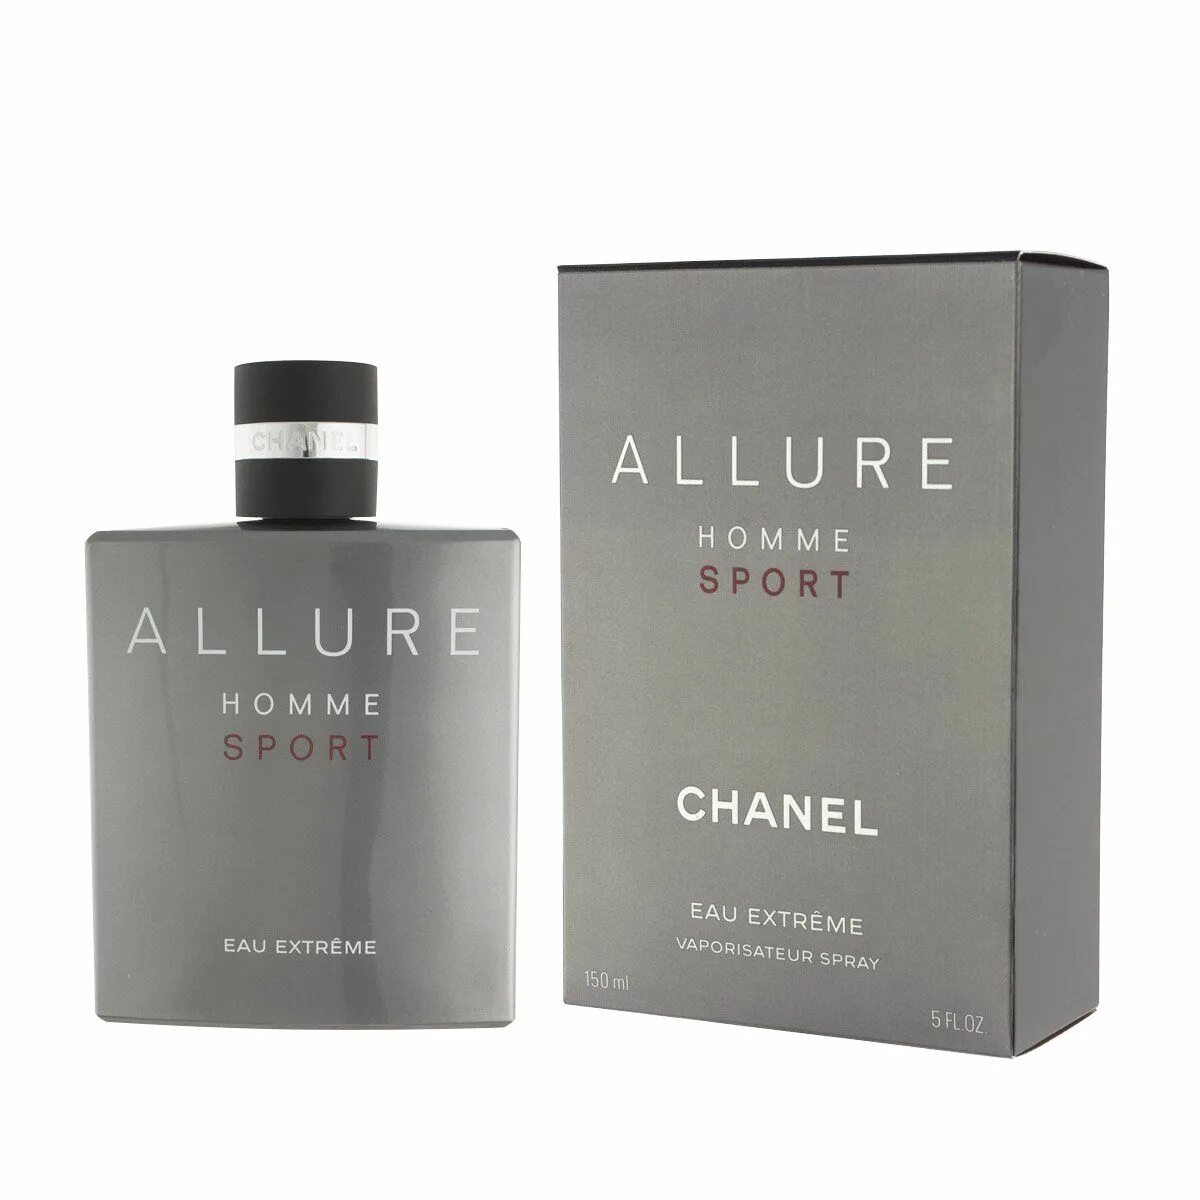 Chanel Allure Sport Eau extreme. Chanel Allure homme Sport extreme. Chanel Allure Sport. Chanel Allure homme Sport 150ml. Allure homme sport eau